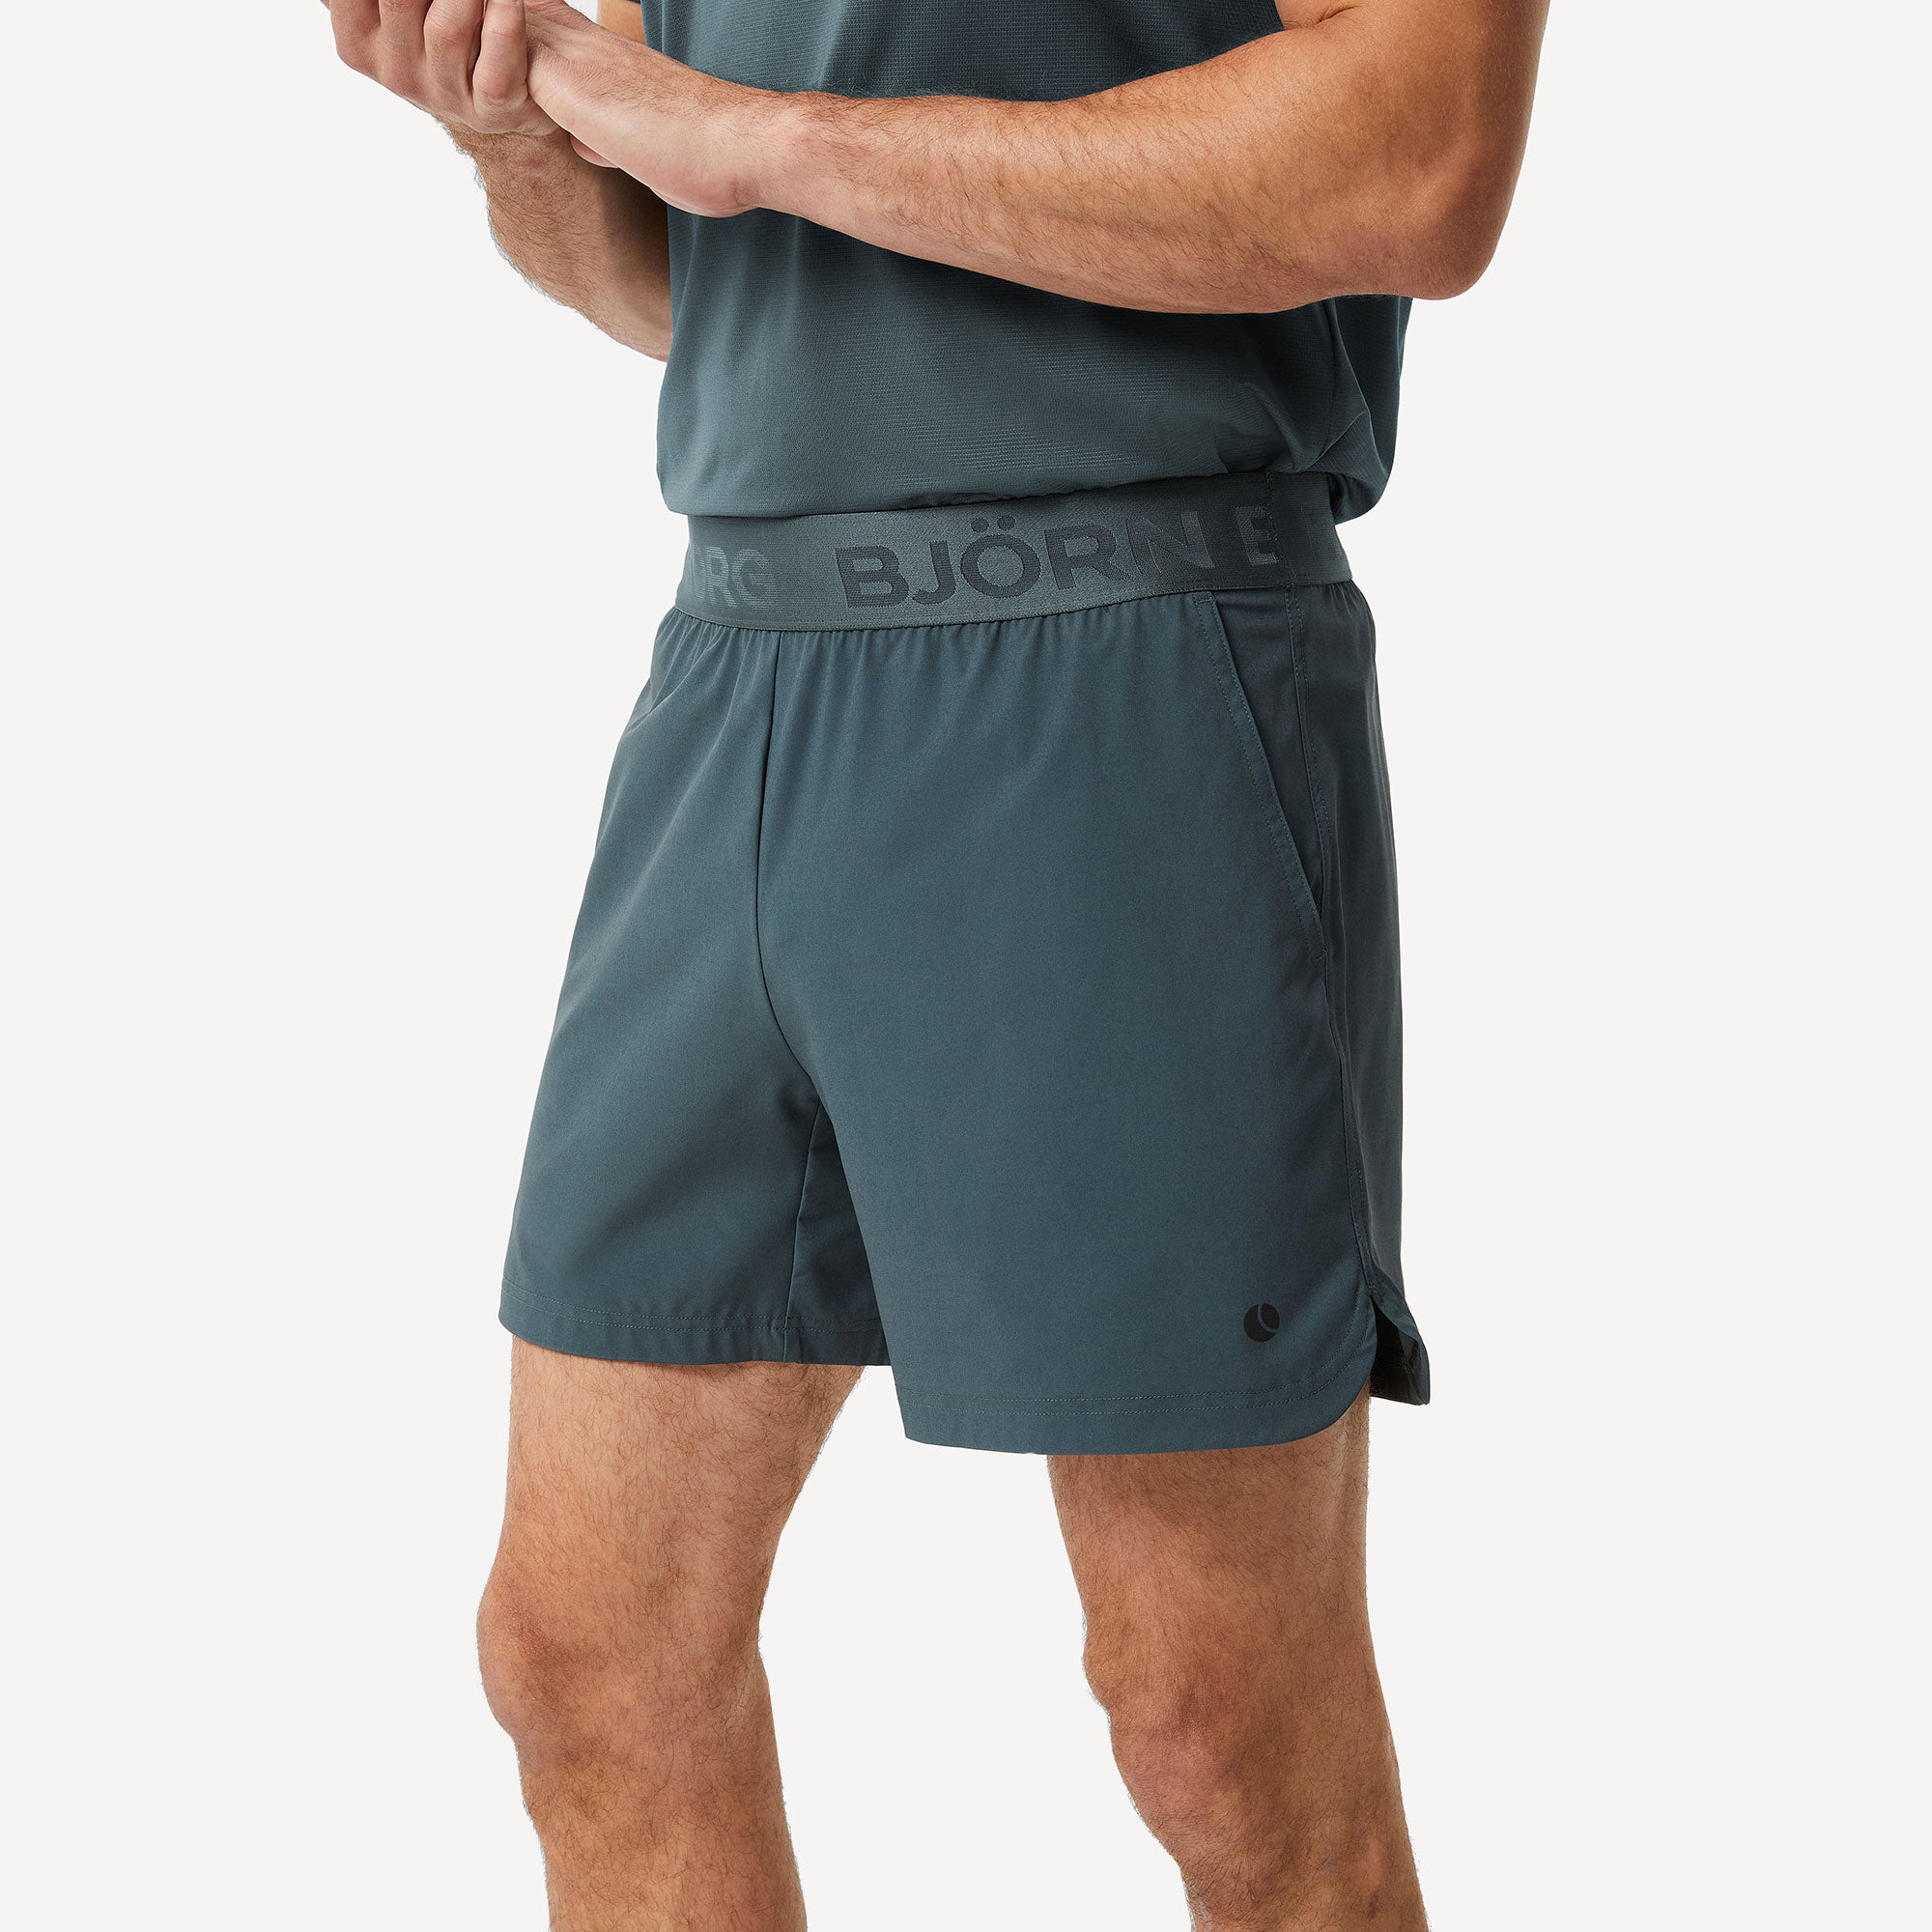 Björn Borg Ace Men's Short Tennis Shorts - Green (1)